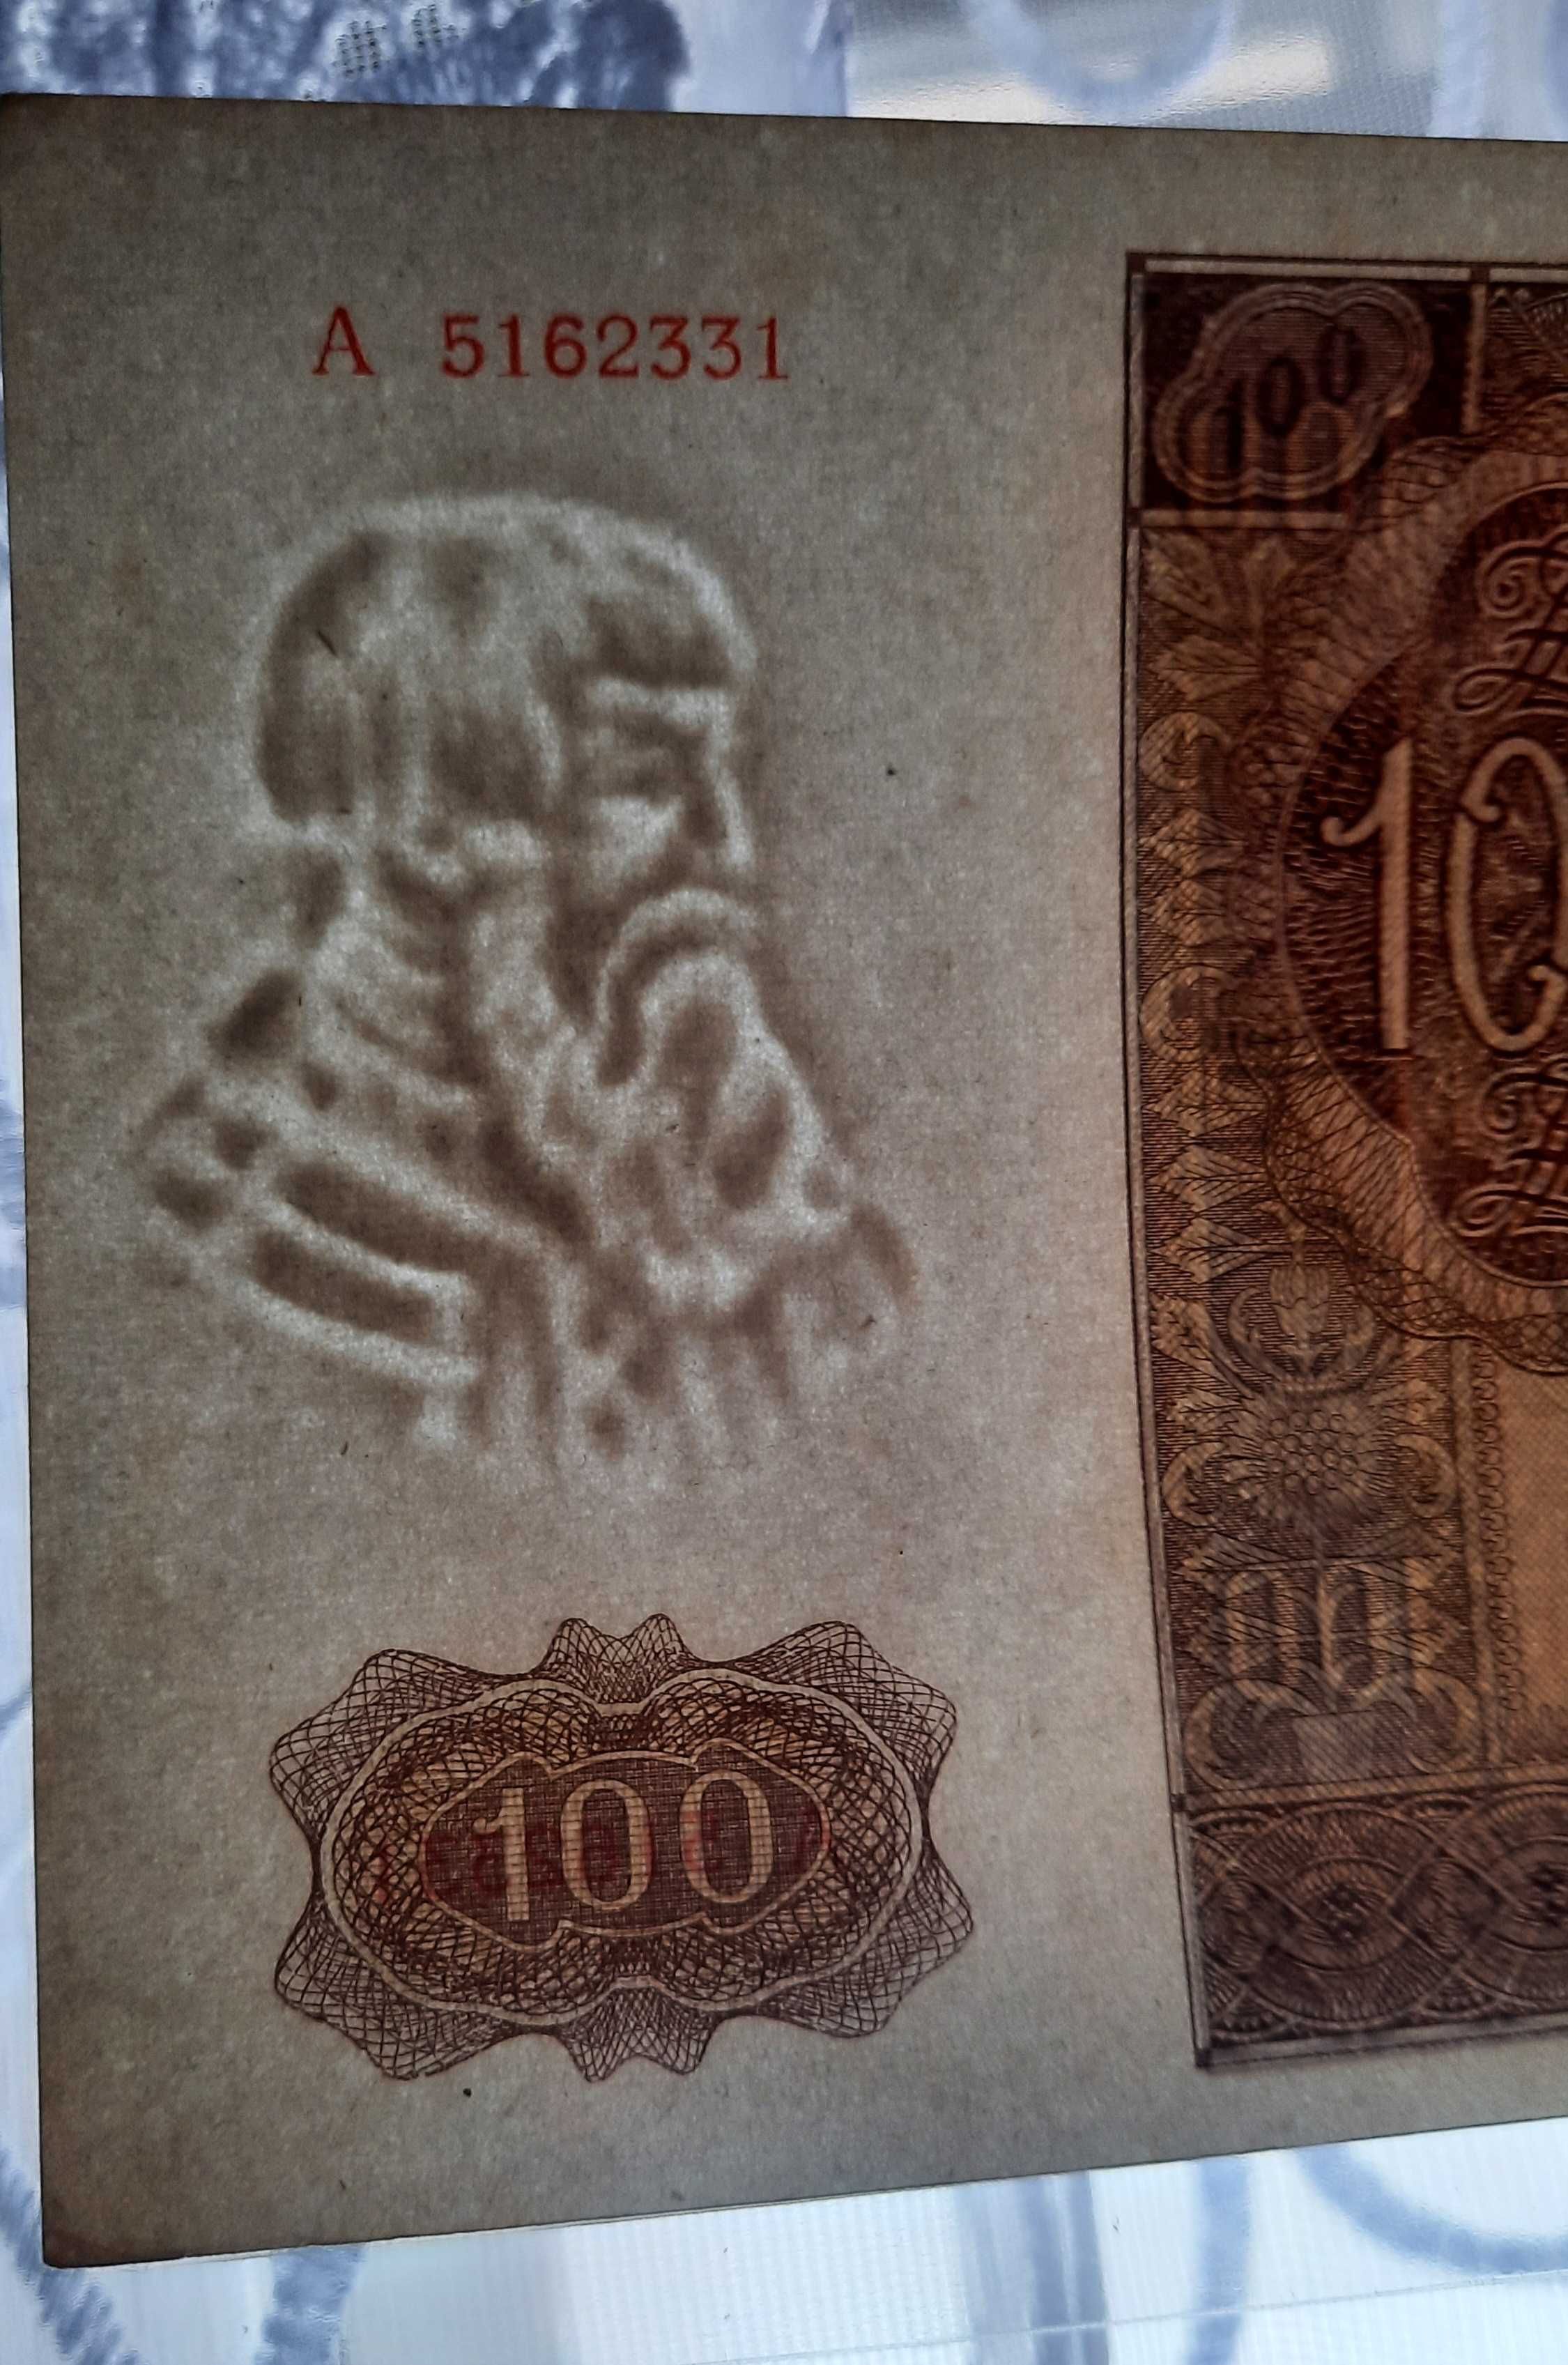 Banknot 100 złotych 1941r. Ser. A